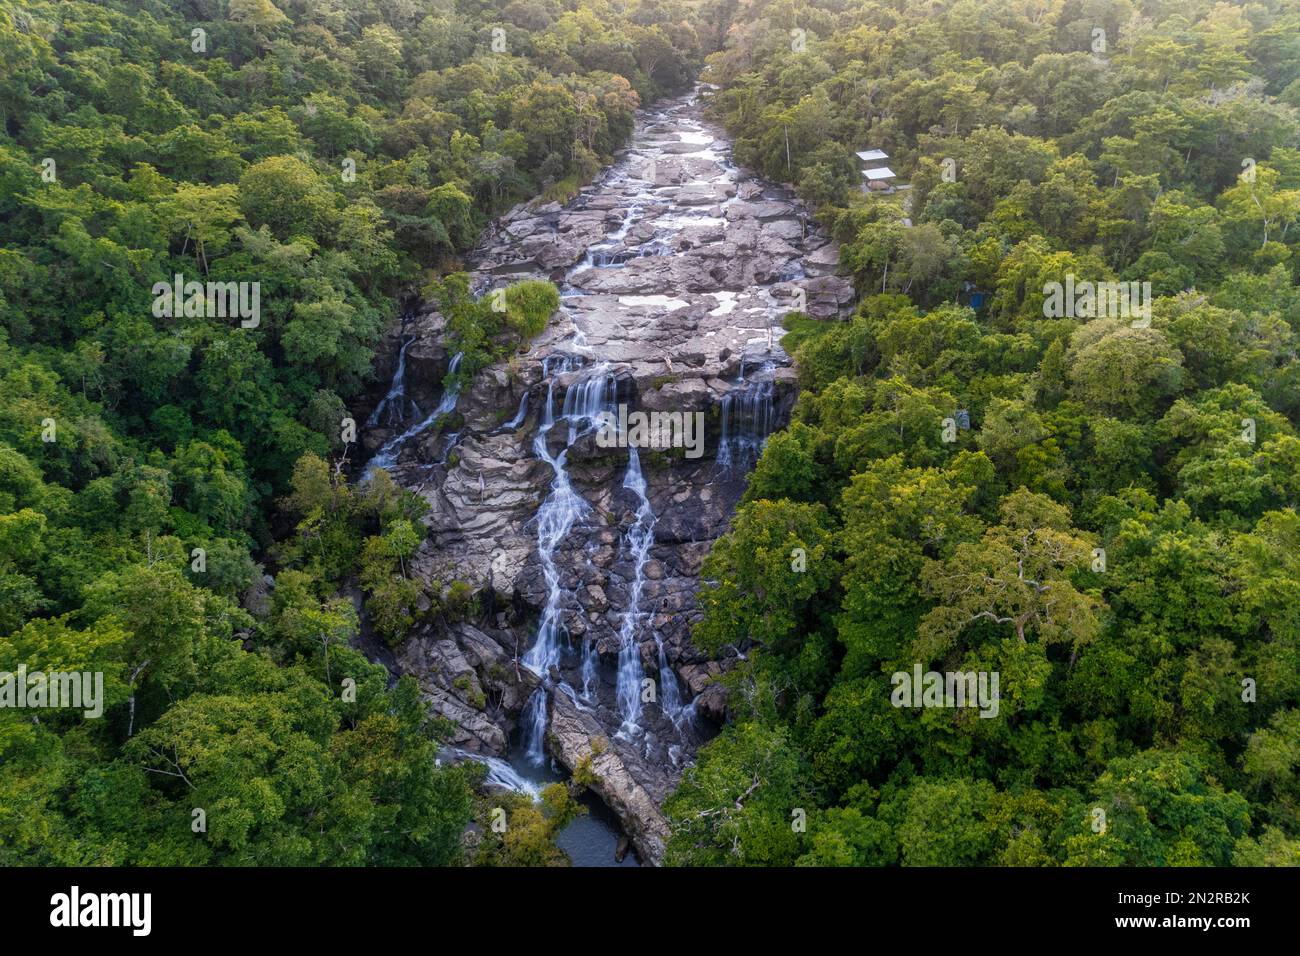 Aerial view of River and waterfall in the jungle, Moyo Hulu, Sumbawa Island, Indonesia Stock Photo